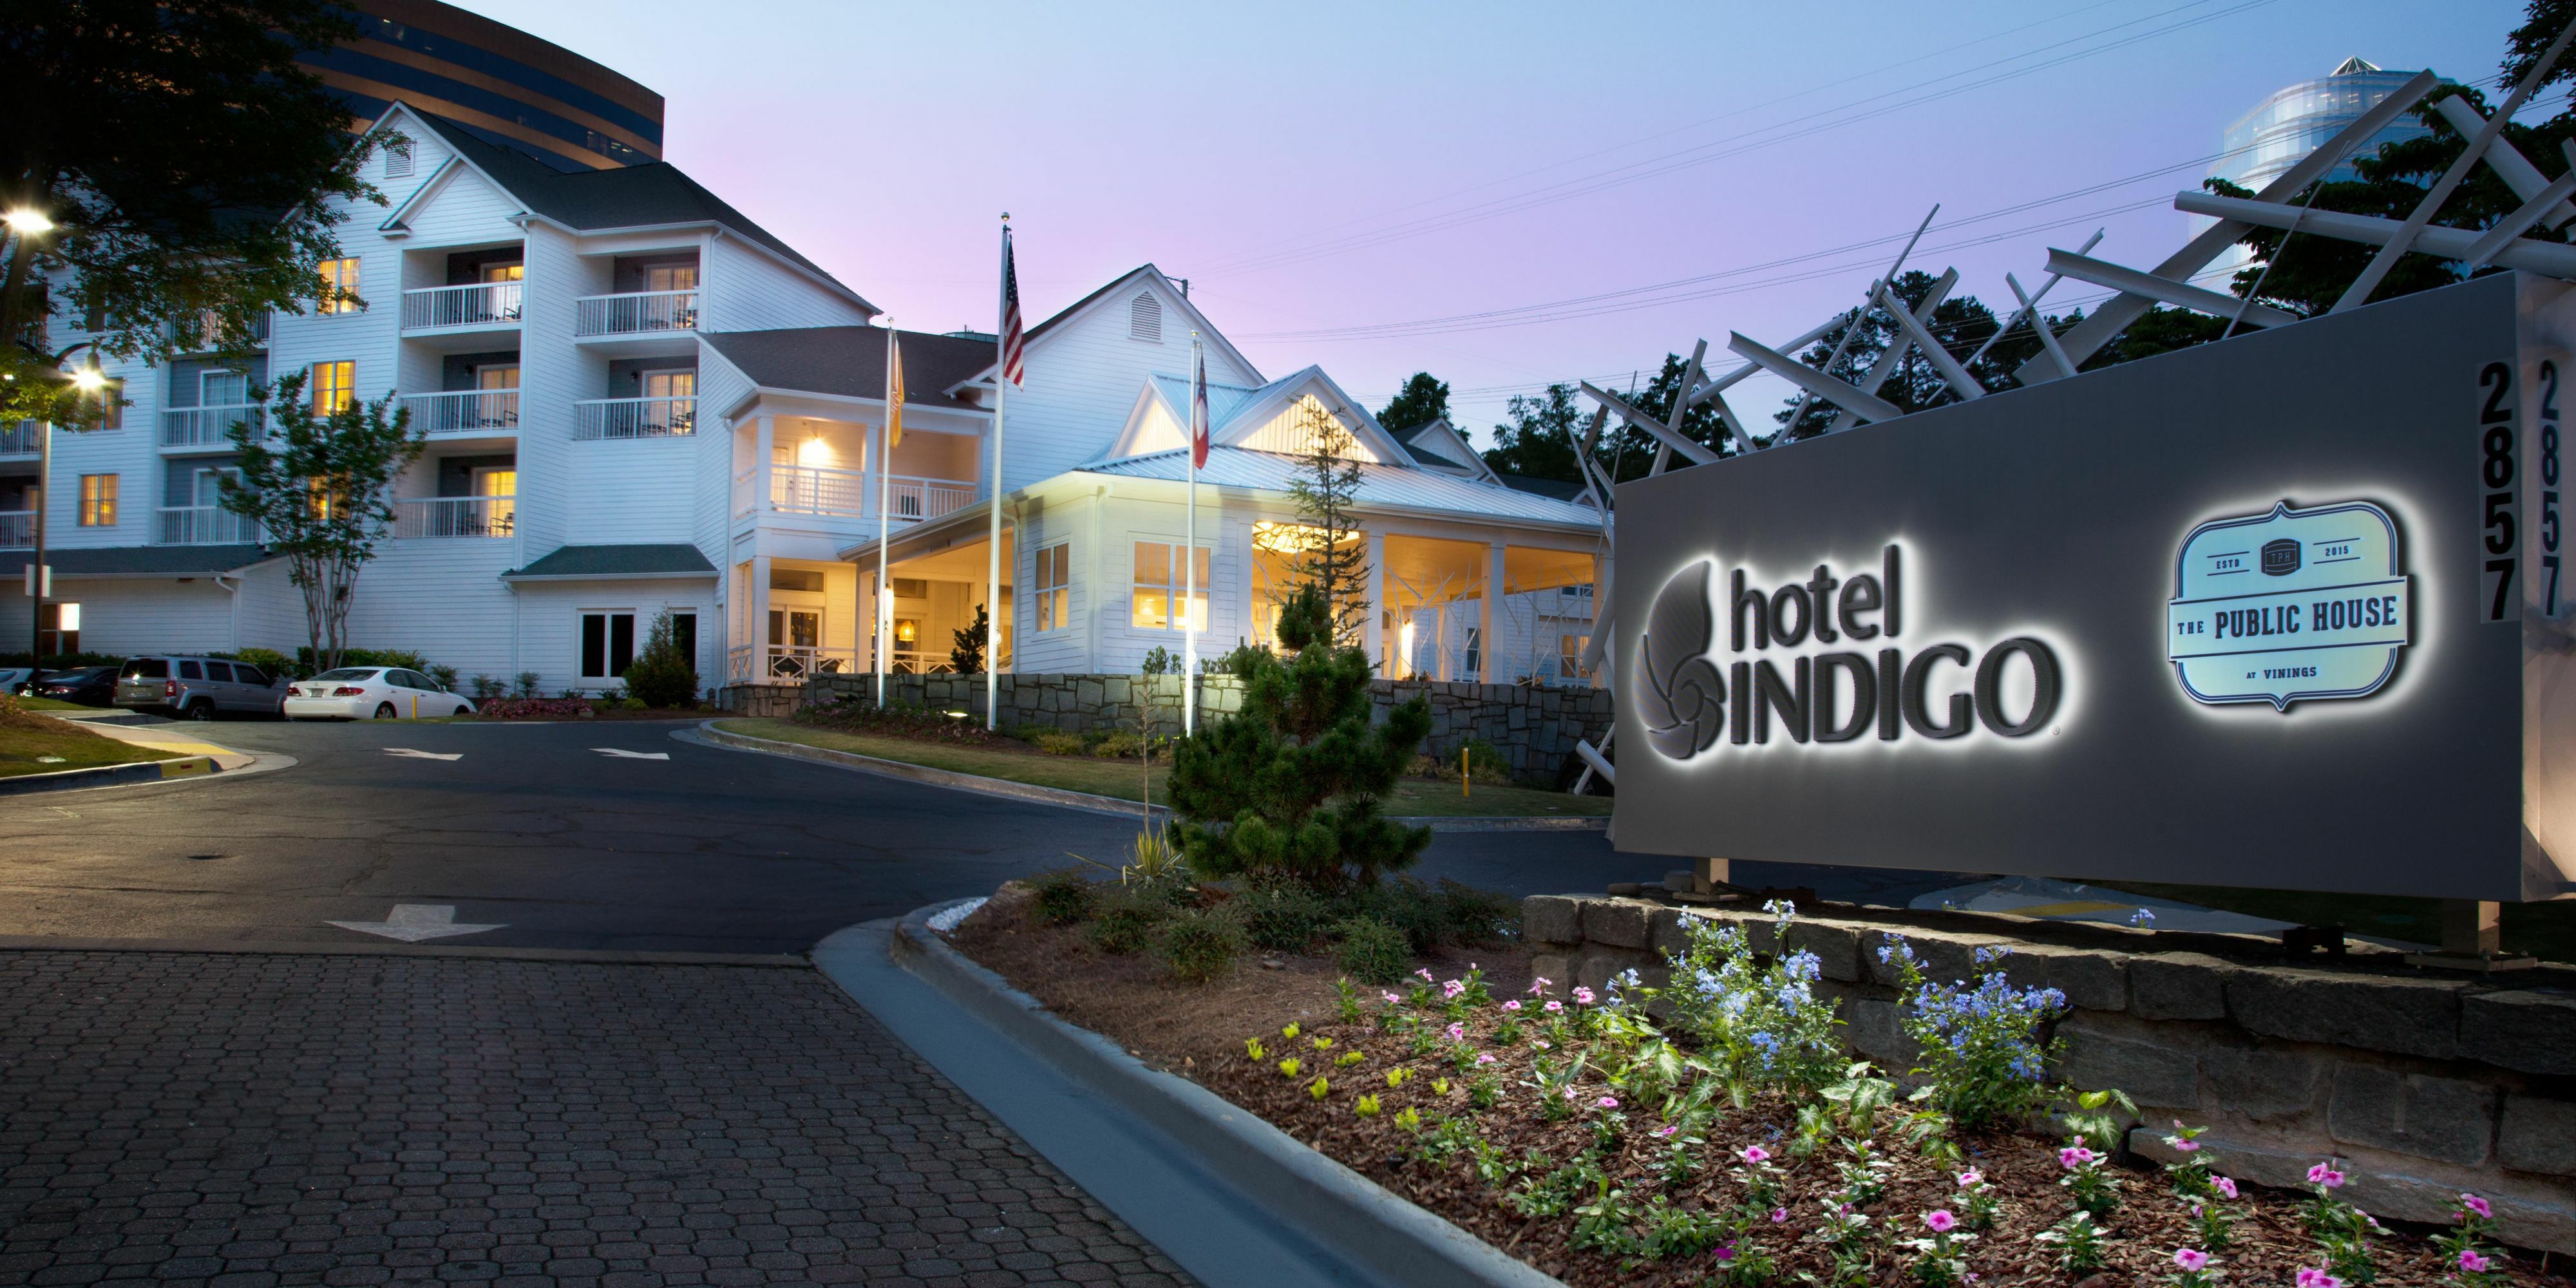 Photo of Hotel Indigo Atlanta - Vinings, Atlanta, GA